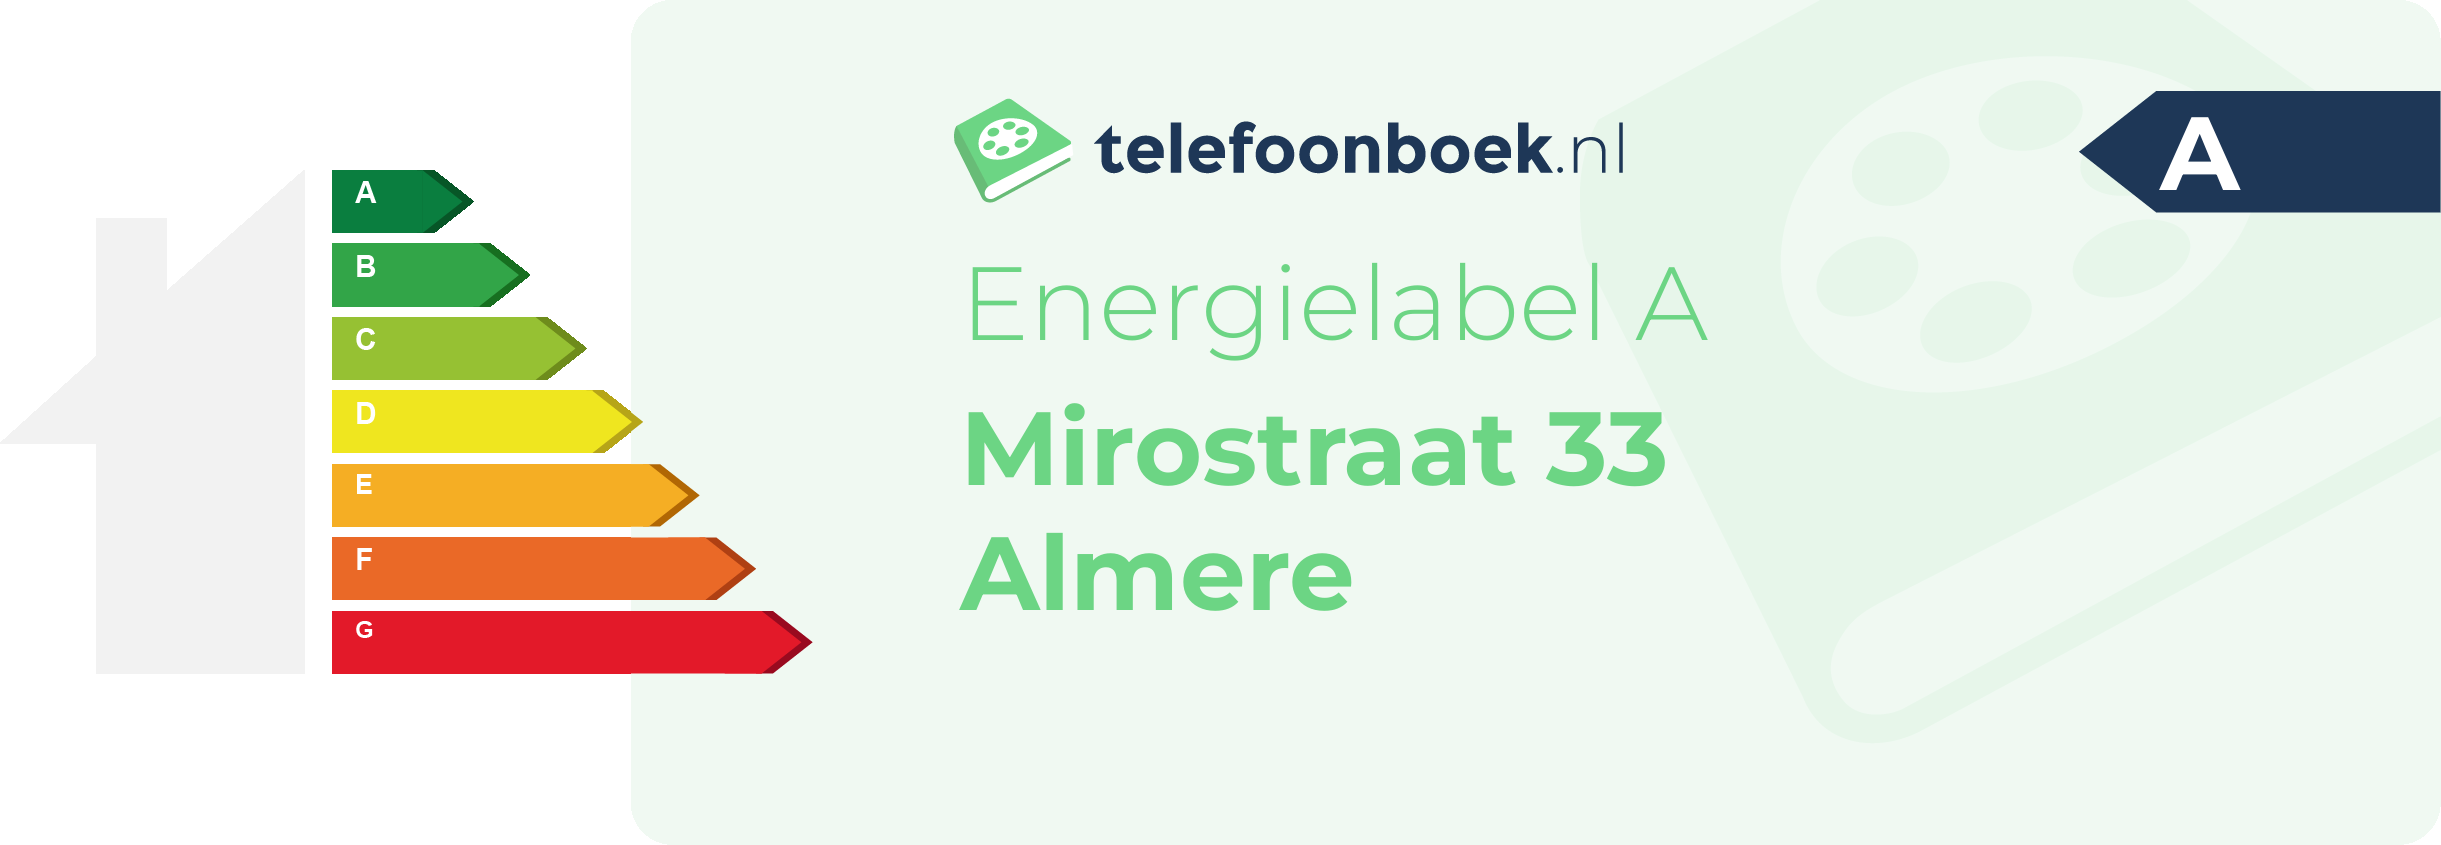 Energielabel Mirostraat 33 Almere